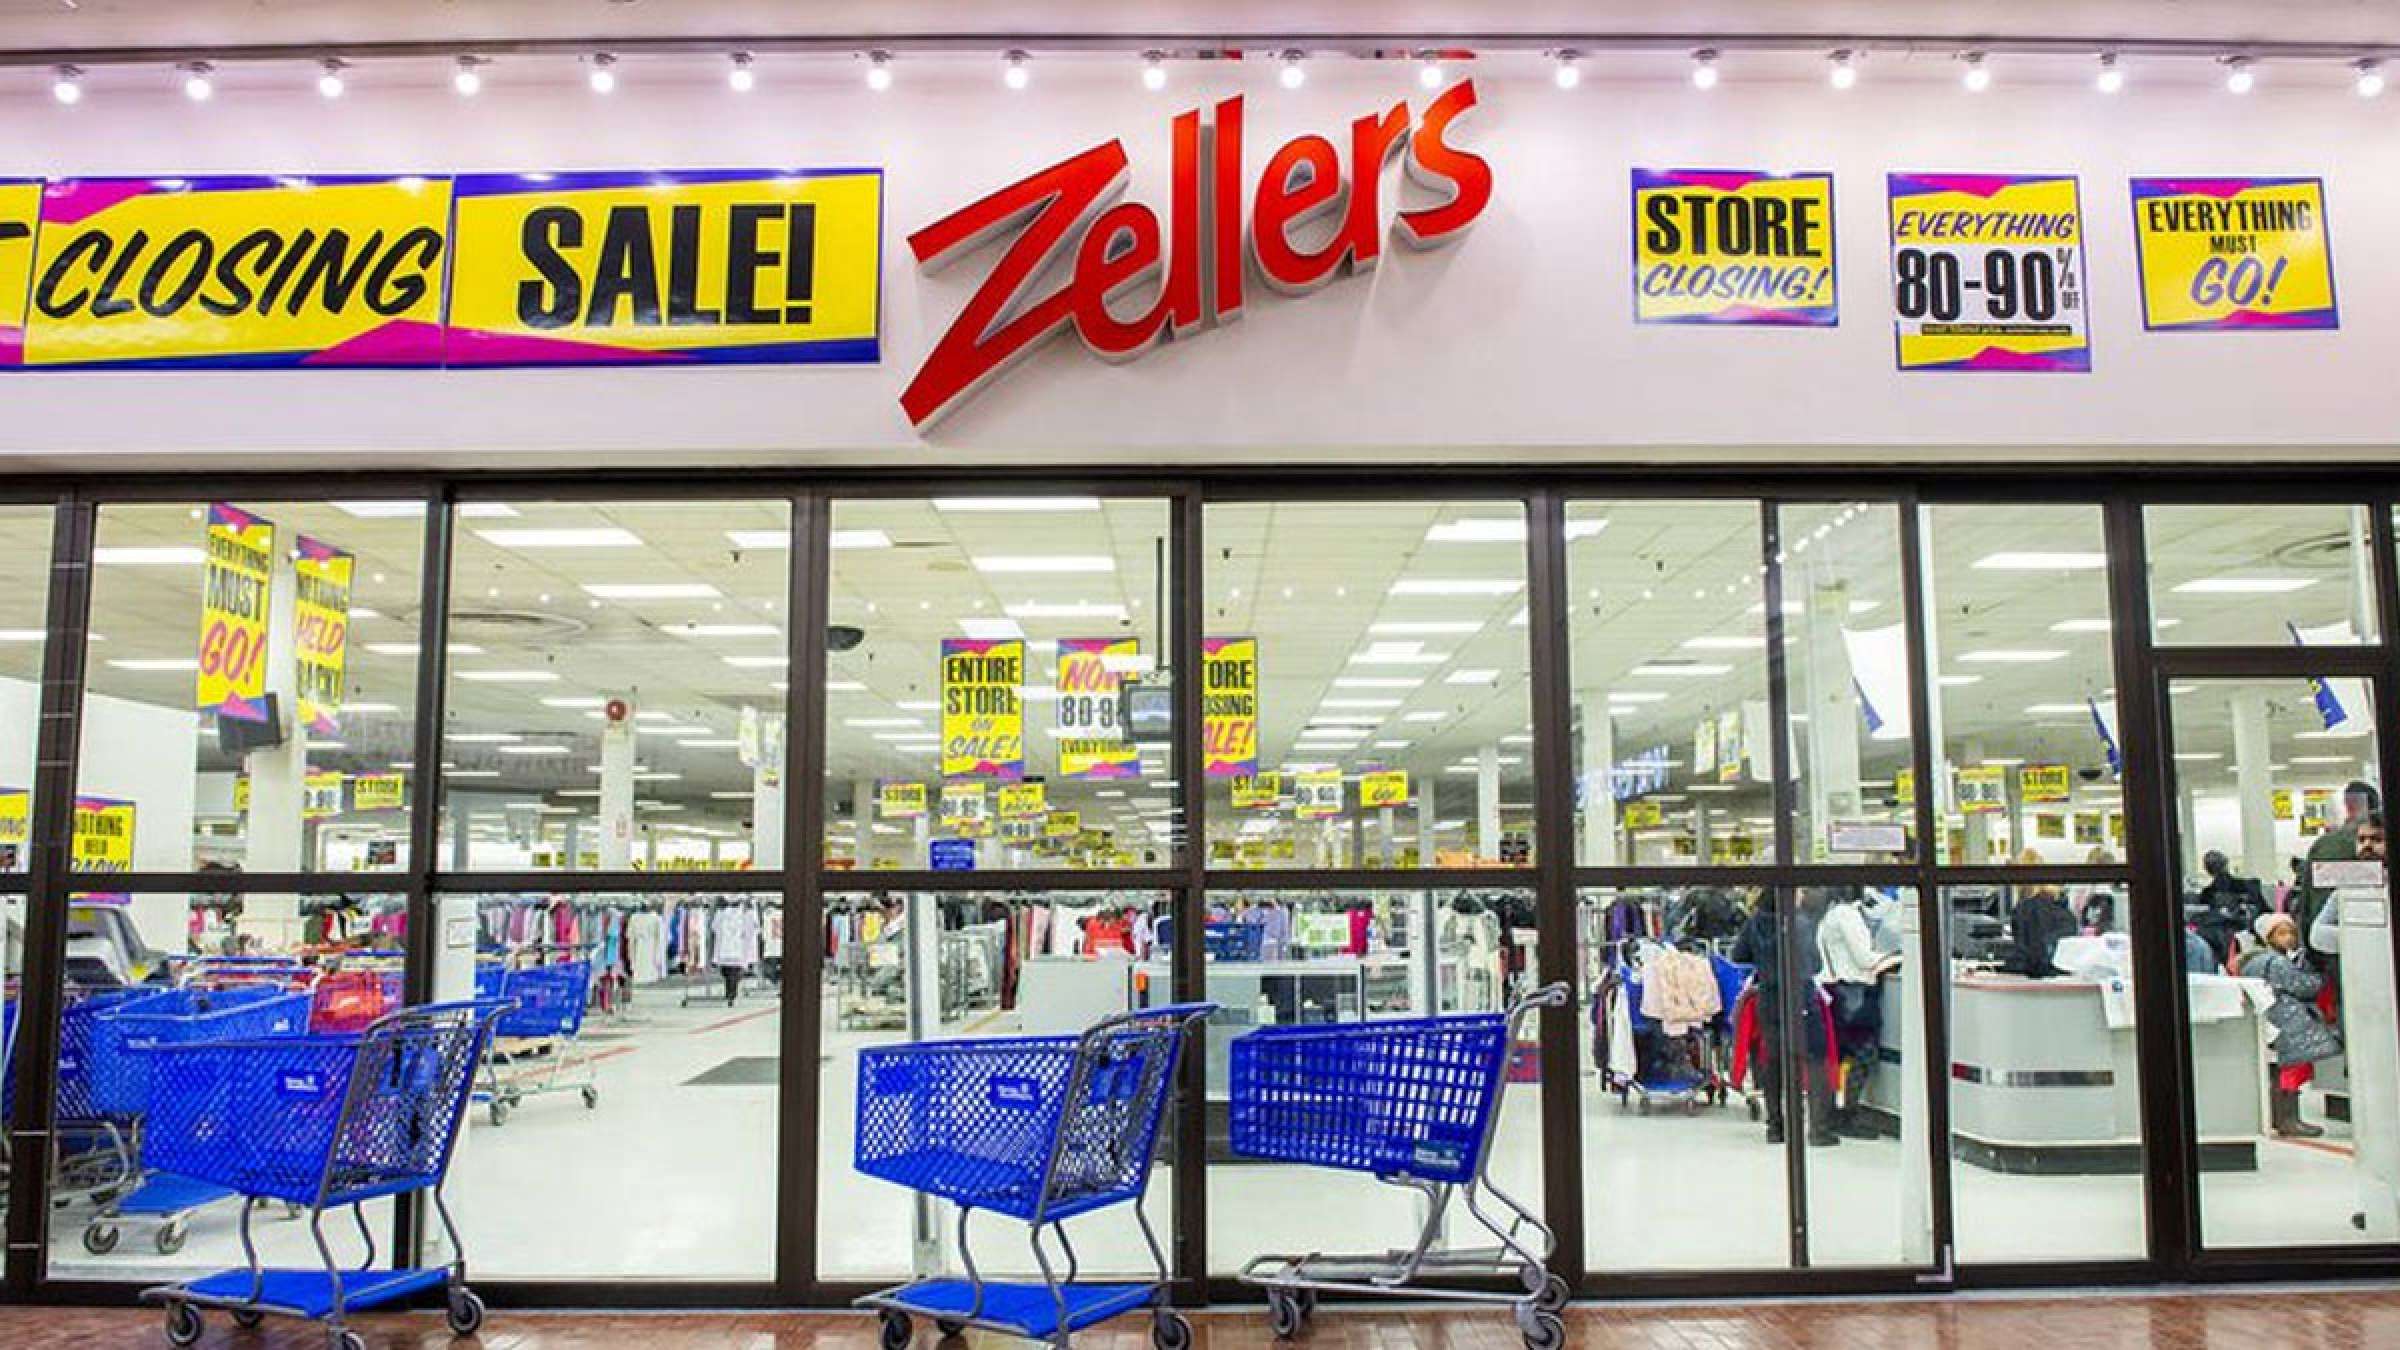 zellers-خبر-کانادا-از-فردا-فروشگاه-زنجیره-ای-معروف-با-کیفیت-ارزان-زلرز-۲۵-مکان-دوباره